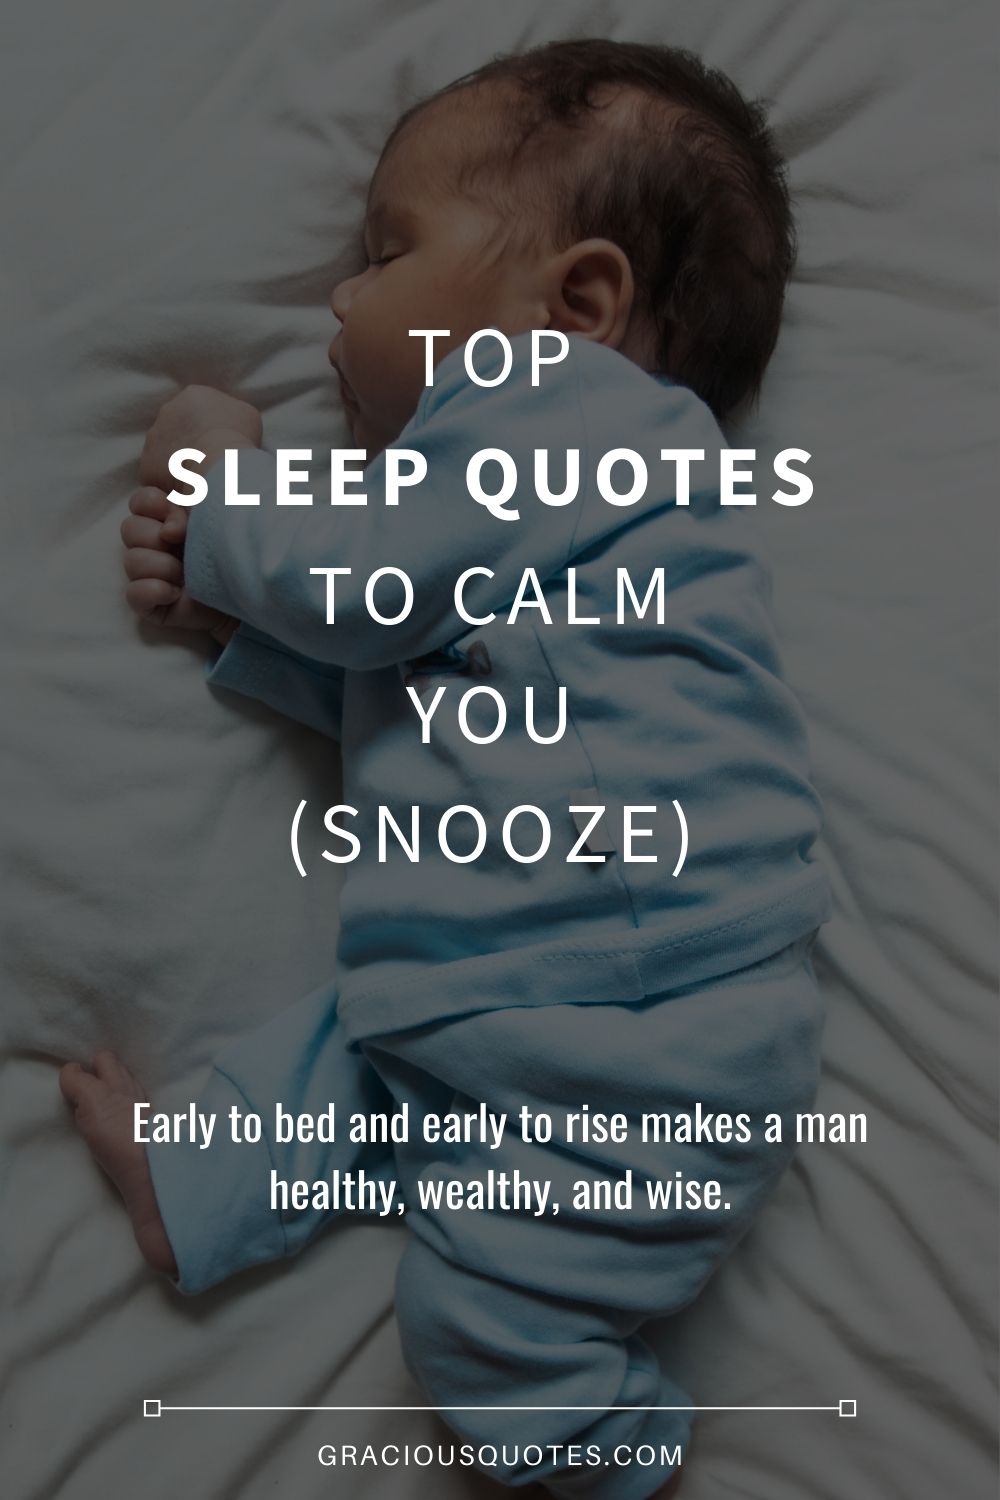 Top Sleep Quotes to Calm You (SNOOZE) - Gracious Quotes